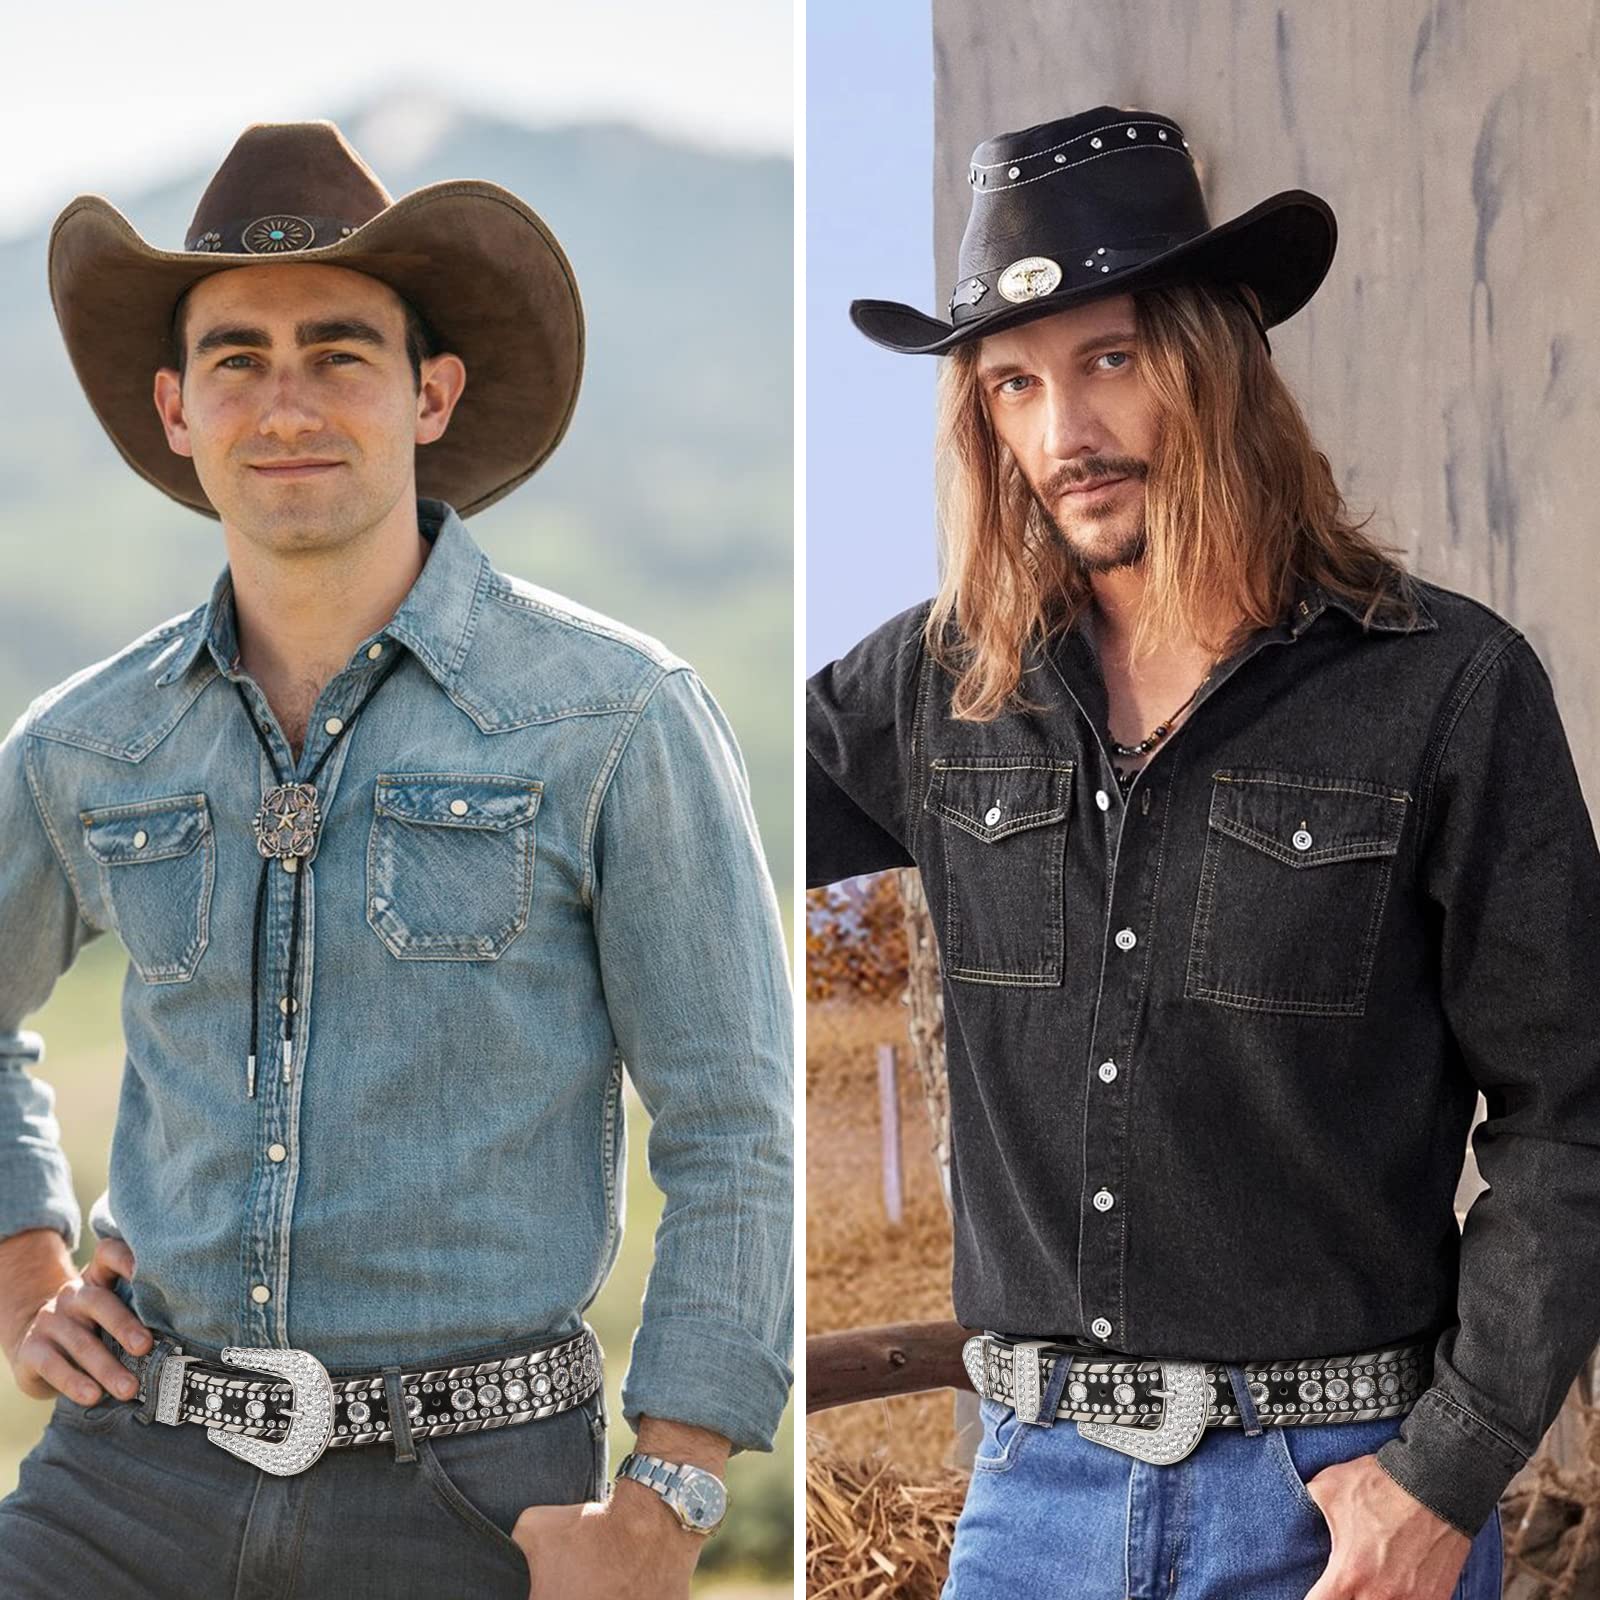 SUOSDEY Rhinestone Belt for Men Women Western Cowboy Cowgirl Bling Studded Leather Belt for Jeans Pants,Black,S